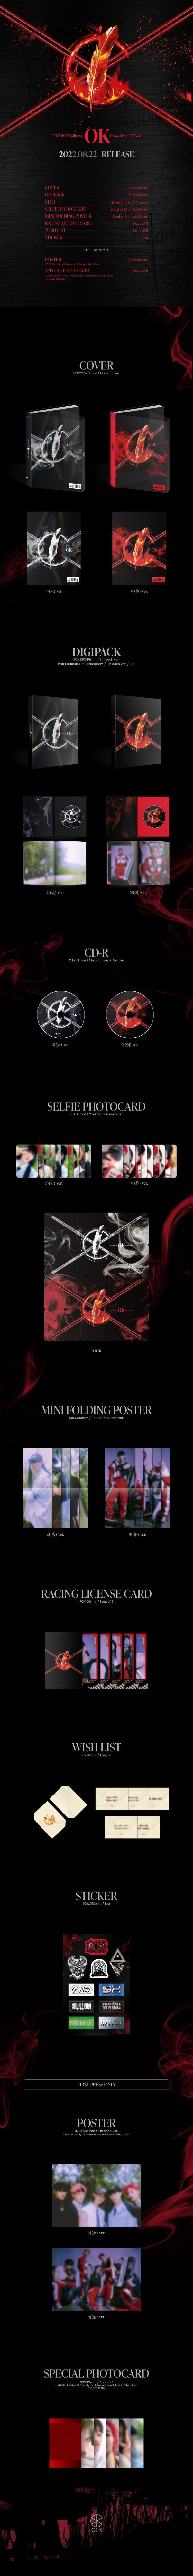 CIX 5th Mini Album 'OK' Episode 1 : OK Not